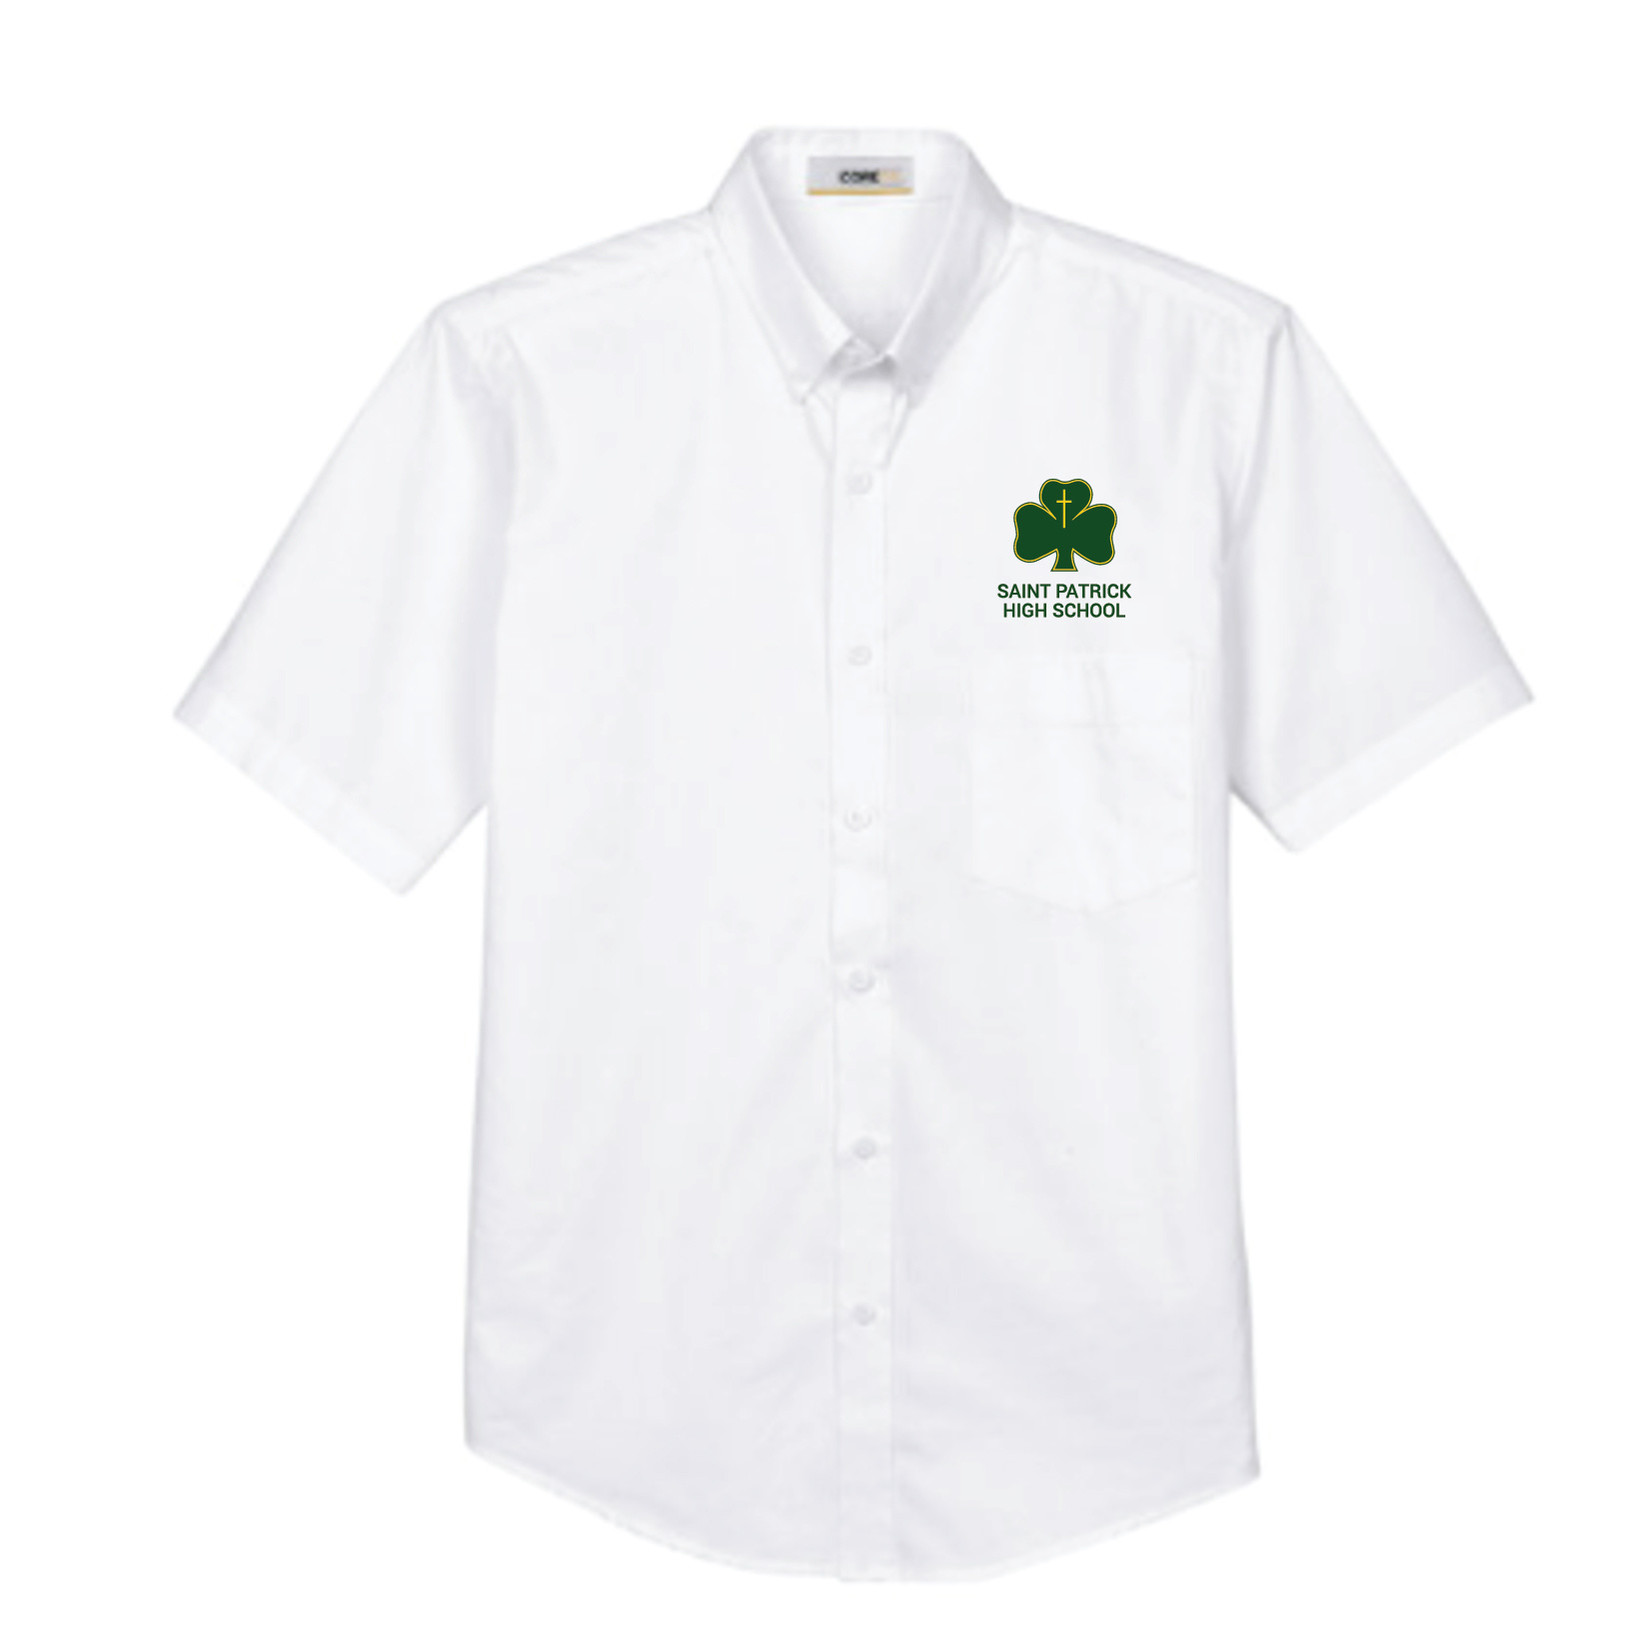 Core 365 Men's/Unisex Optimum Short Sleeve Shirt Twill Shirt 88194